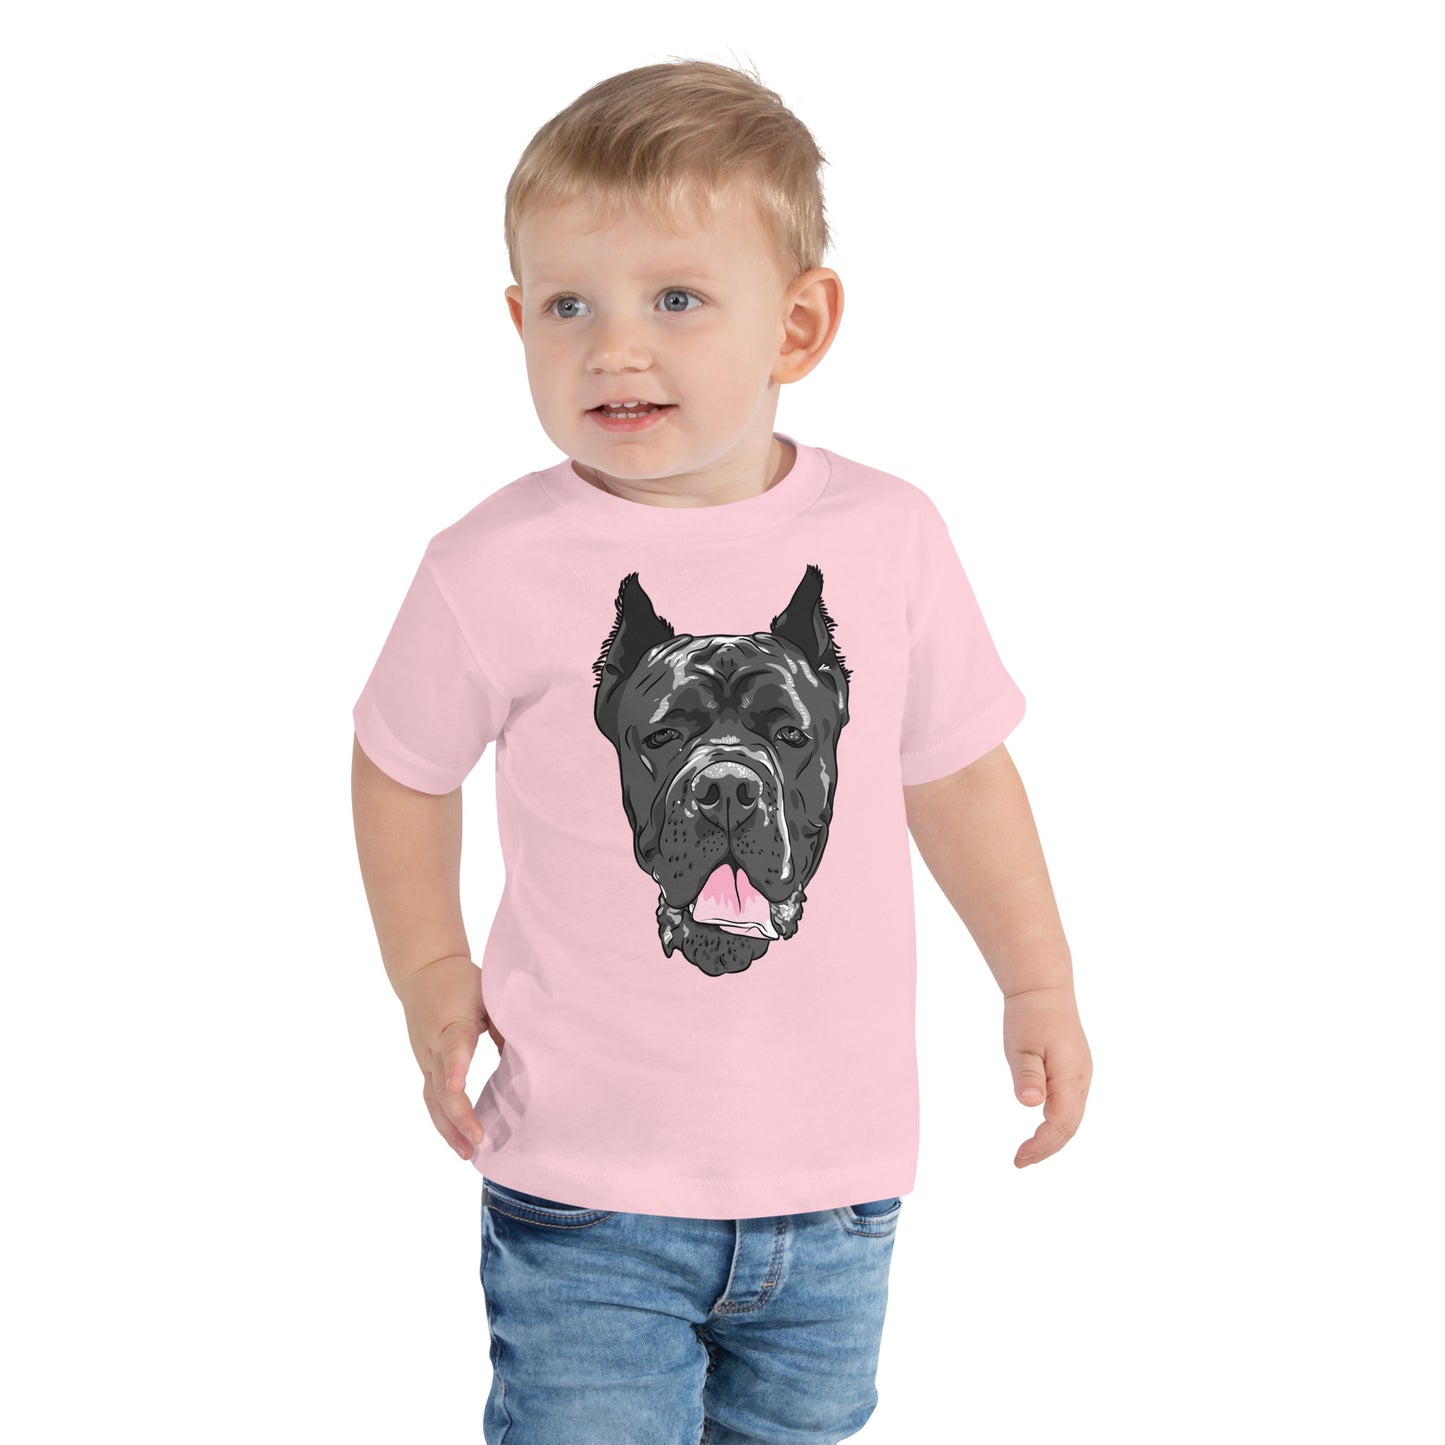 Cane Corso Italiano Dog T-shirt, No. 0553